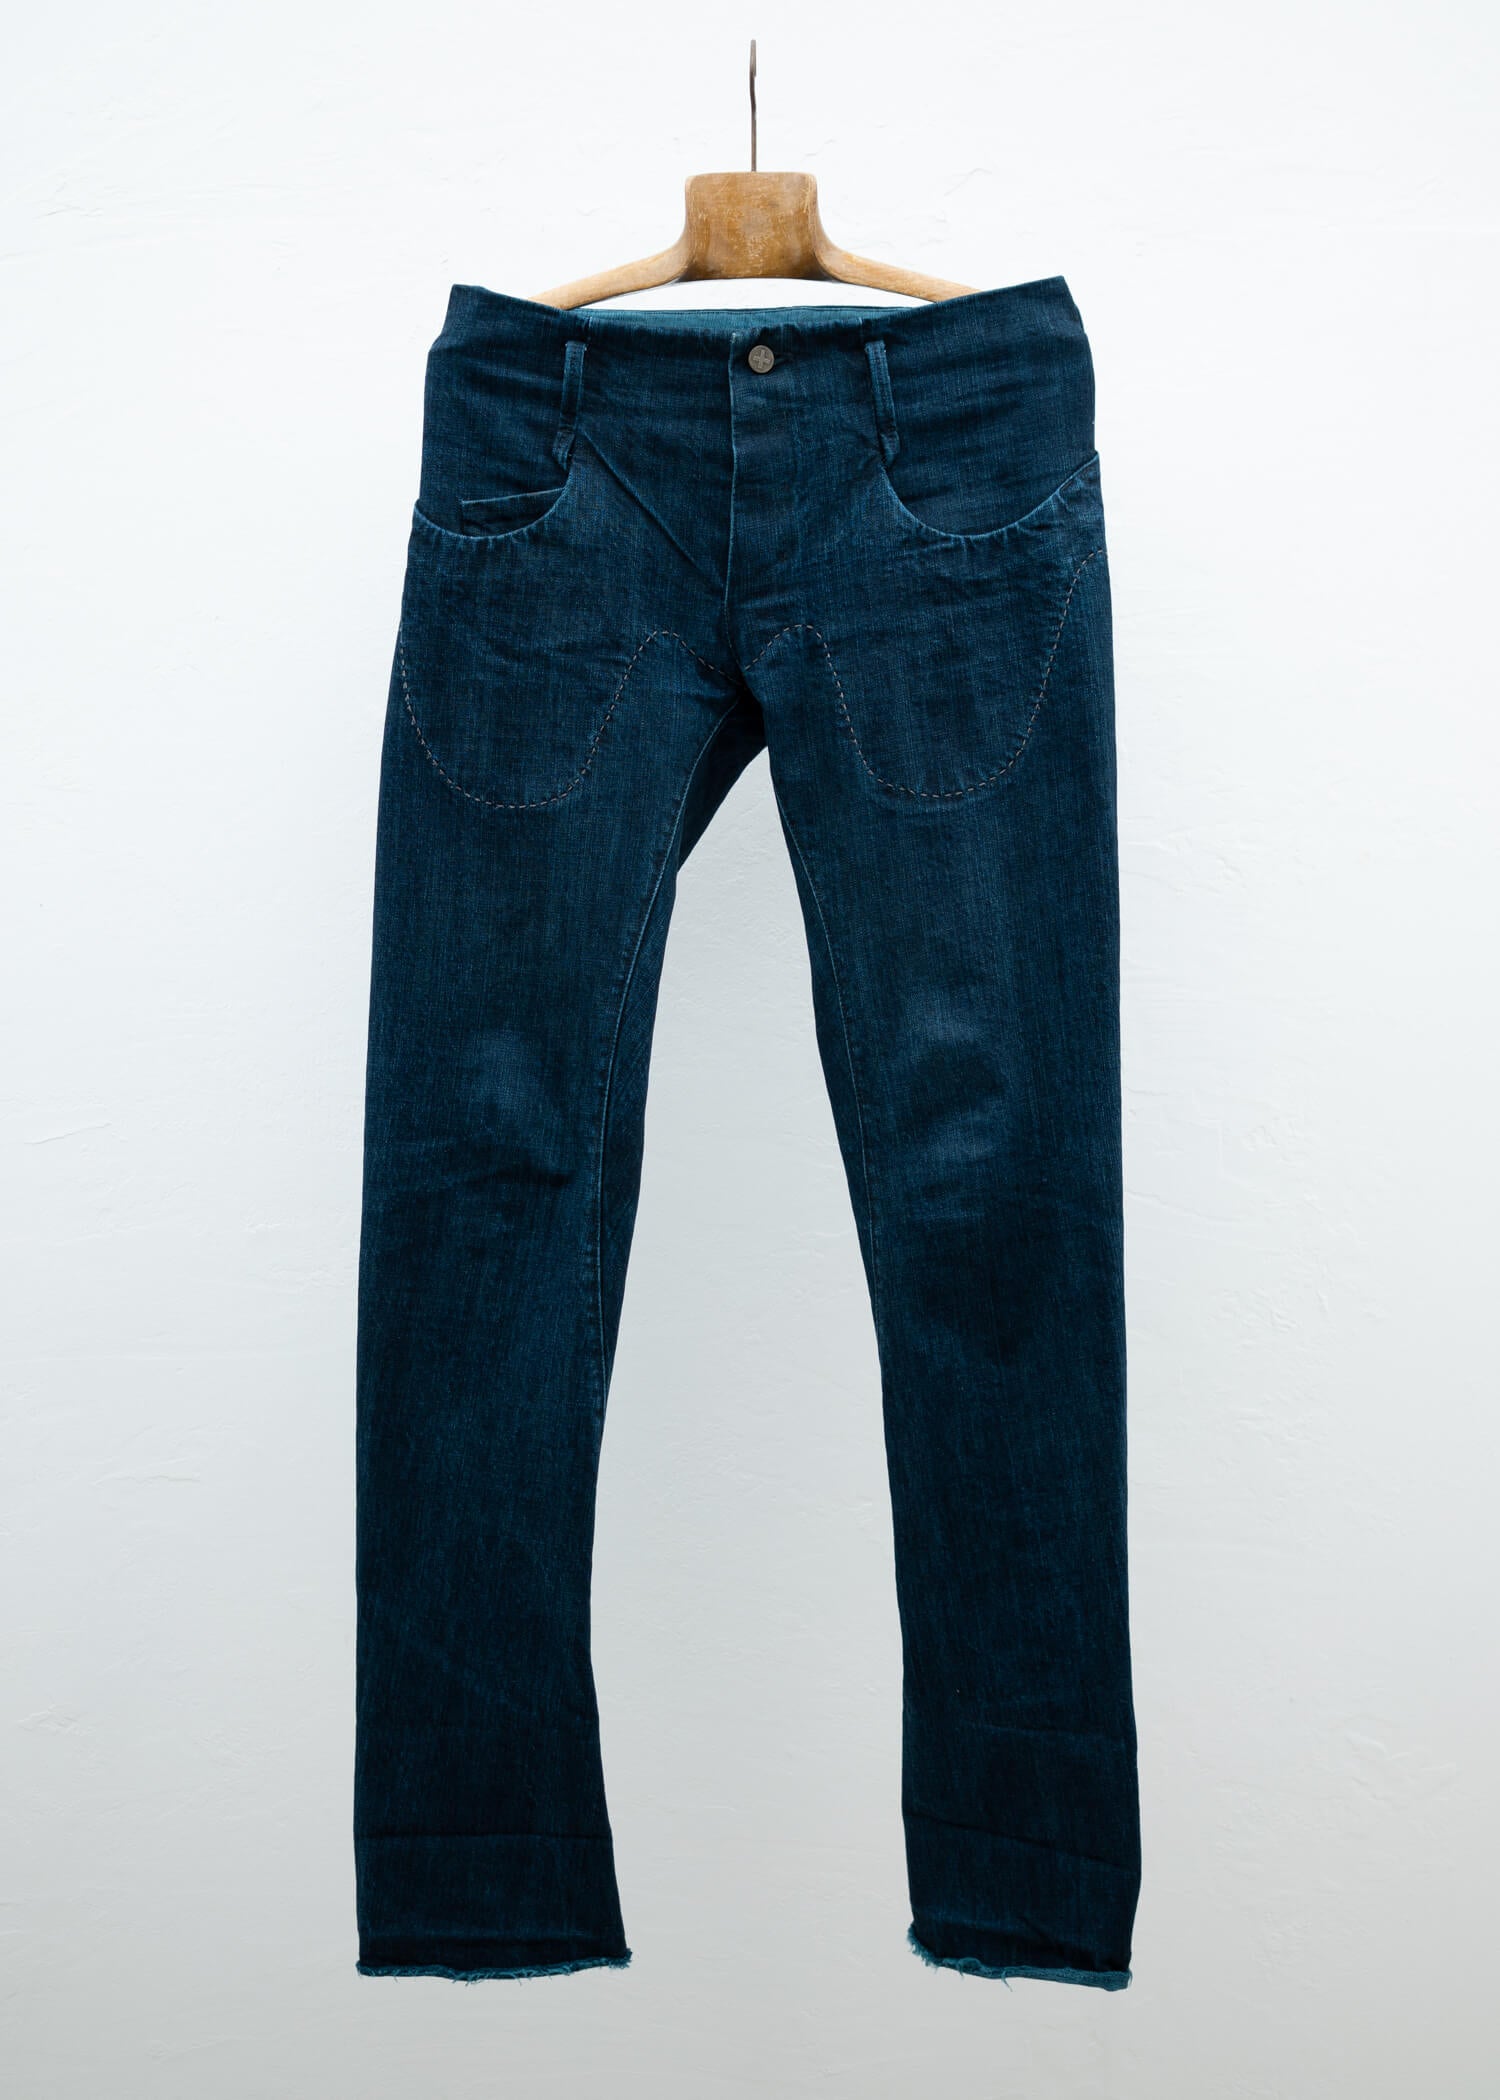 ma+ 19AW 0P01.10-CDI Denim Jeans デニムパンツ